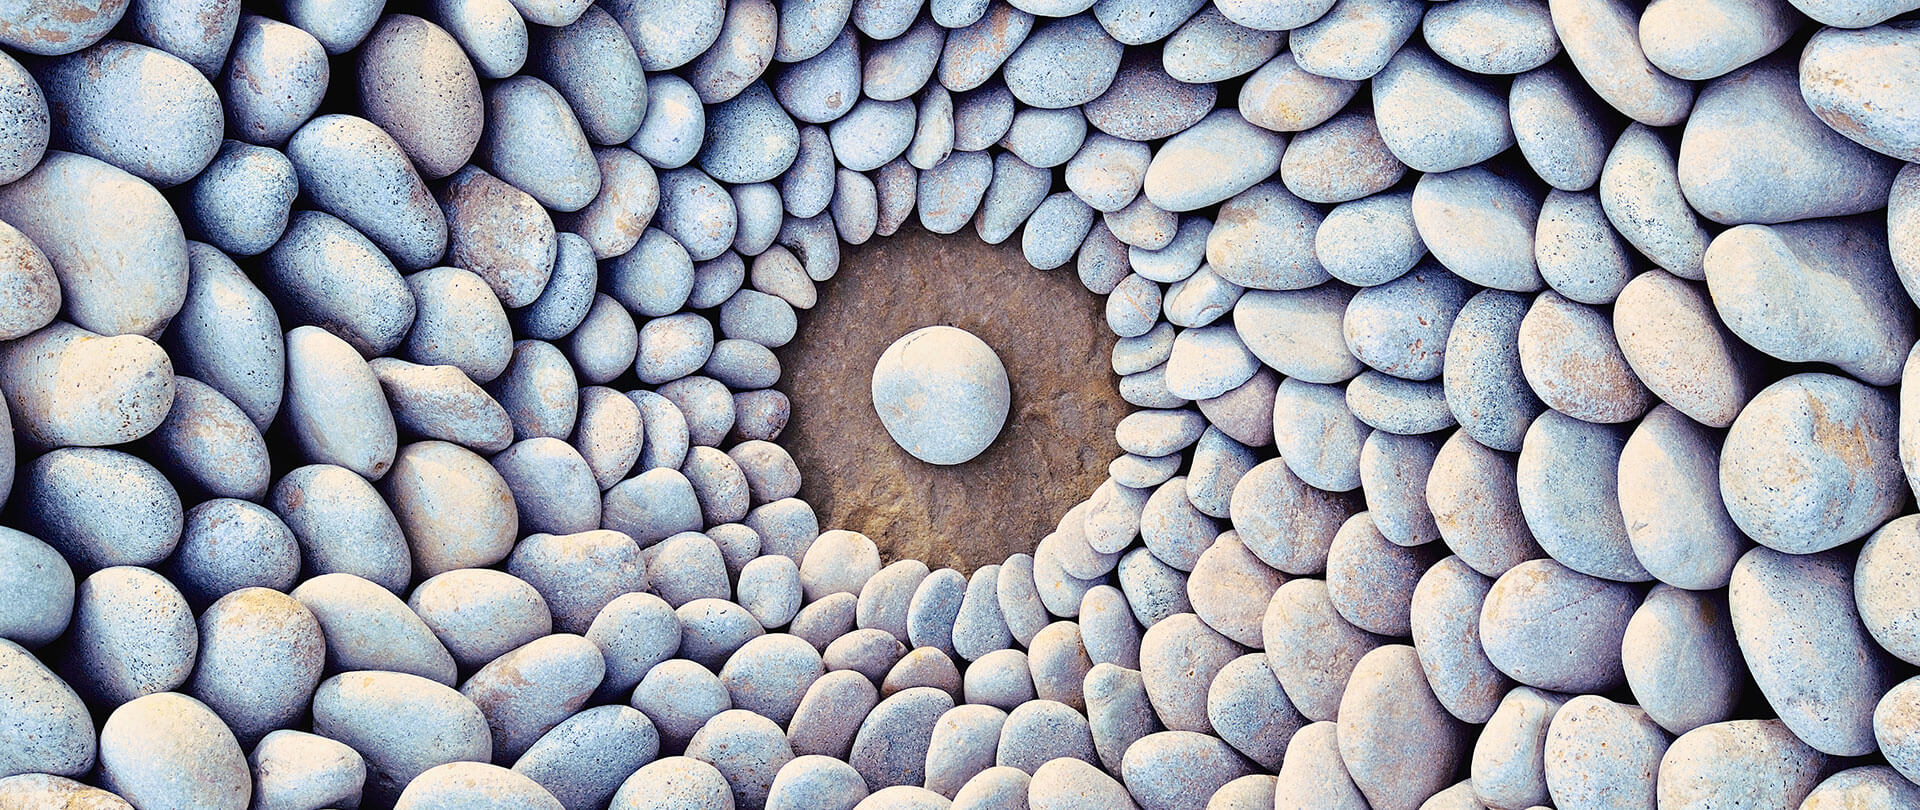 Sea stones arranged on the beach